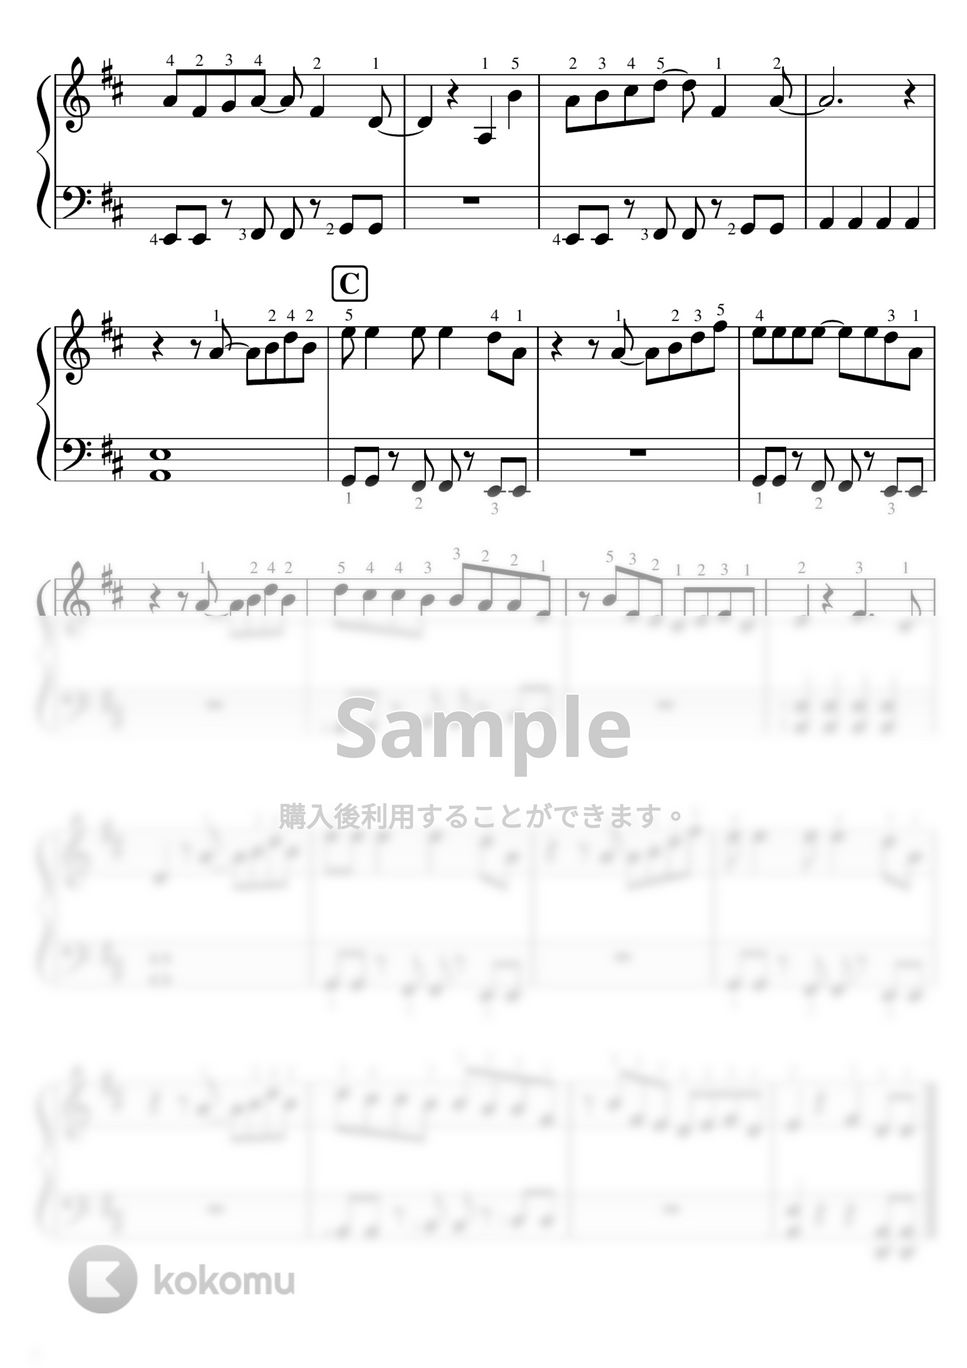 BUMP OF CHICKEN - 【初級】SOUVENIR（スーベニア）BUMP OF CHICKEN/SPYxFAMILY/スパイファミリー (スパイファミリー,SPYFAMILY,BUMP OF CHICKEN ,souvenir) by ピアノのせんせいの楽譜集